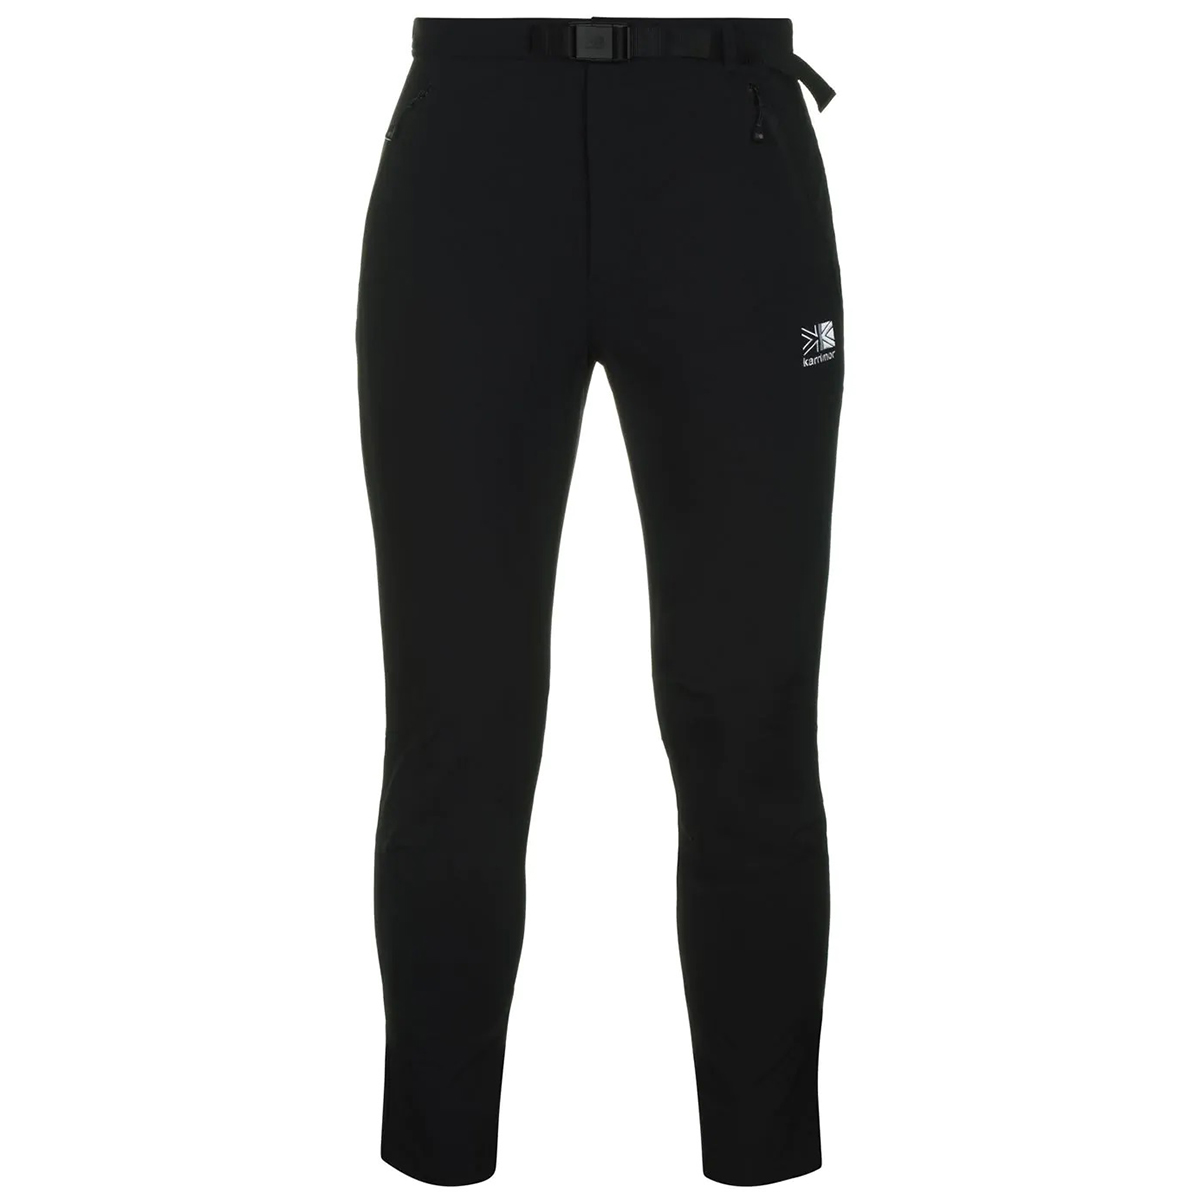 Karrimor Men's Df Jogging Pants - Black, L